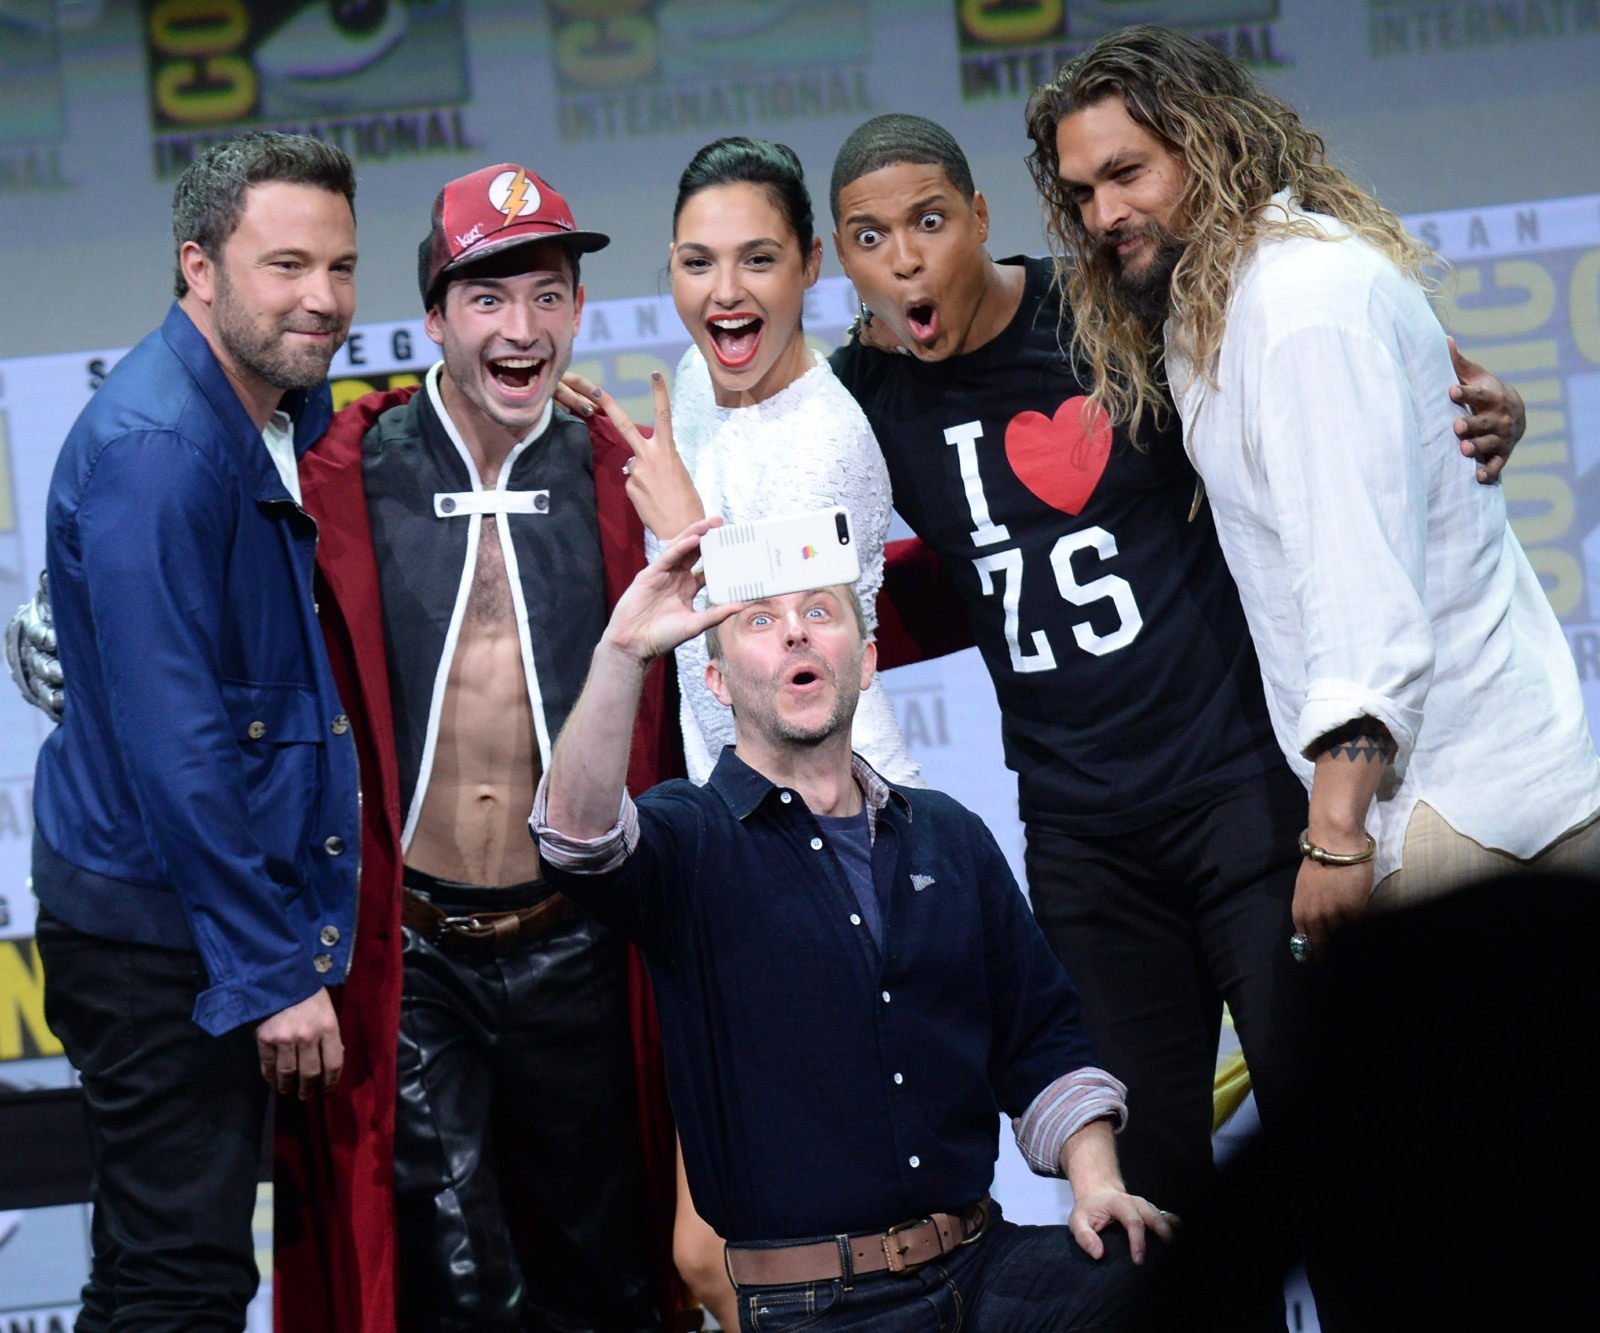 'Justice League' Comic Con 2017 Panel